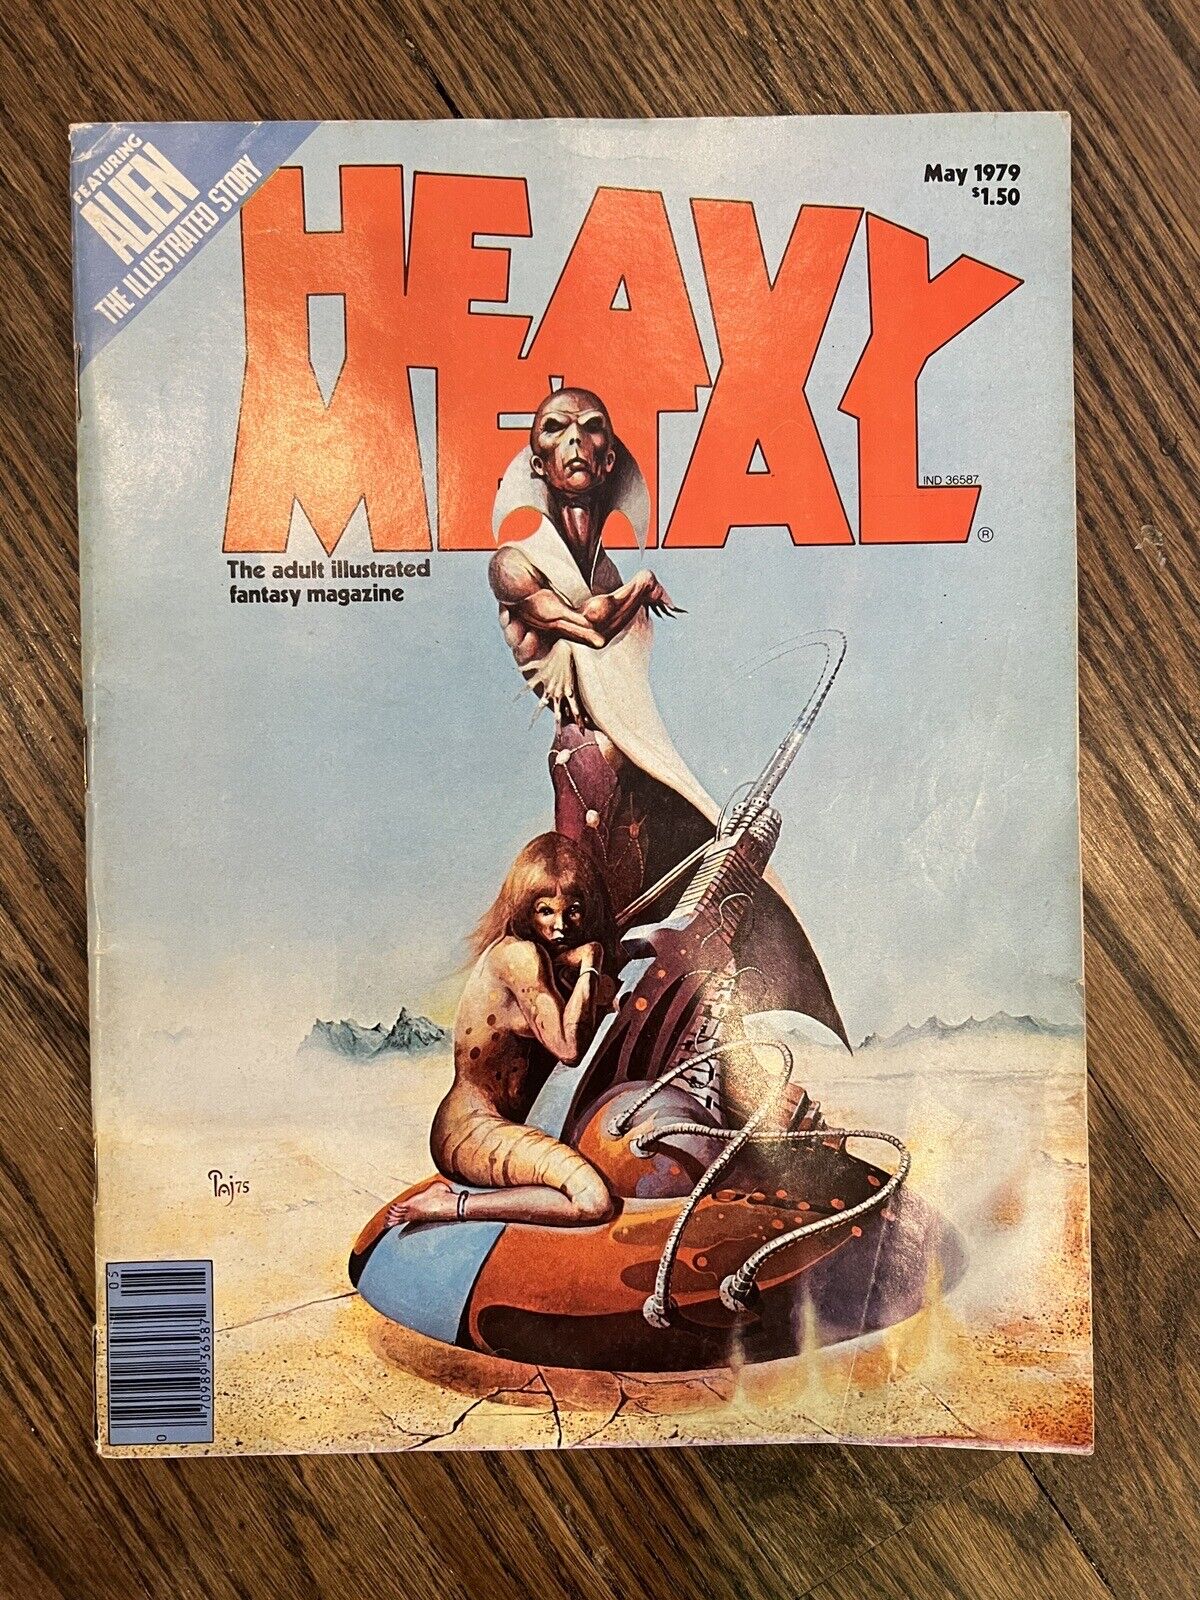 Heavy Metal Magazine May 1979 KEY 1st ALIEN by Simonson/Goodwin plus Moebius VF